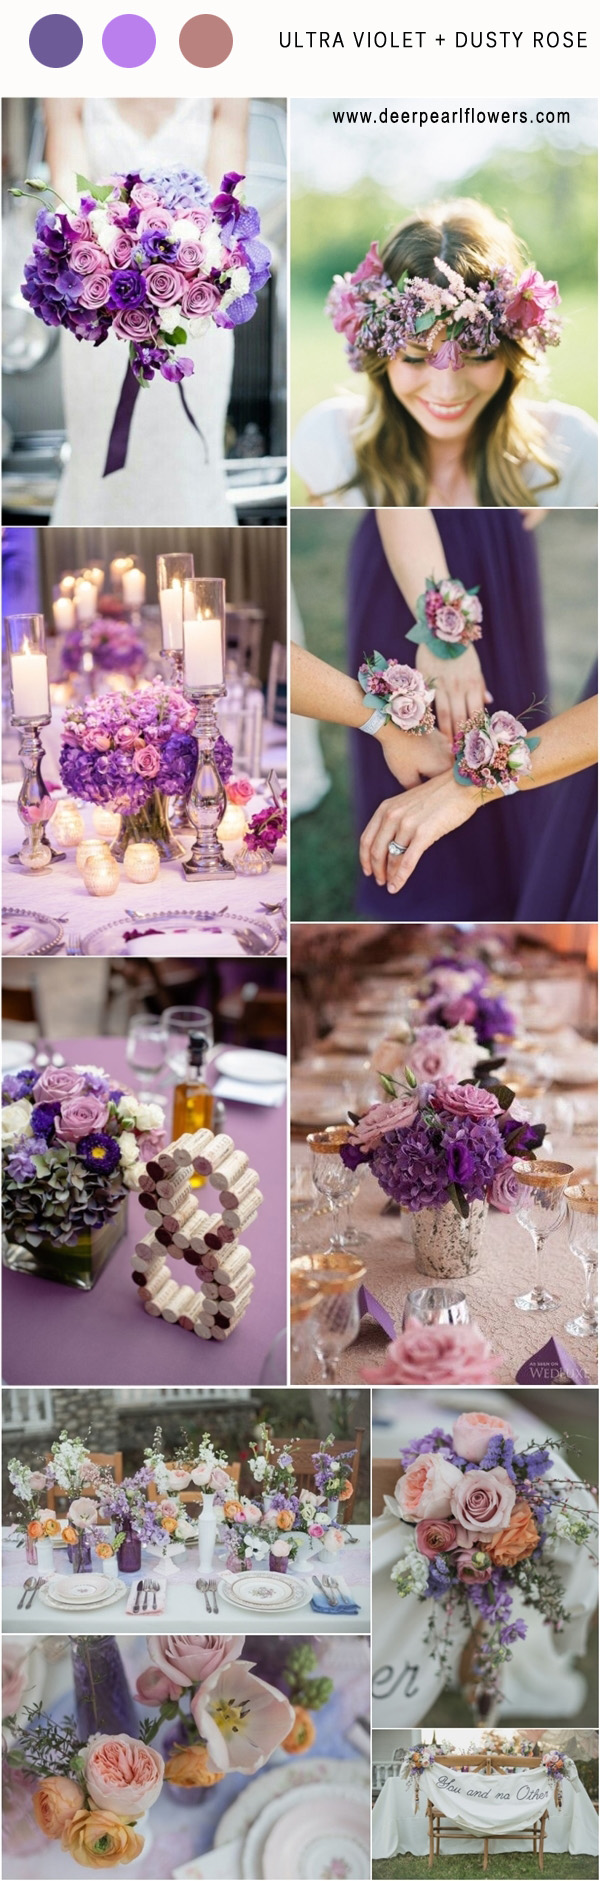 pantone wedding color 2018- Ultra violet and dusty rose wedding color palette idea